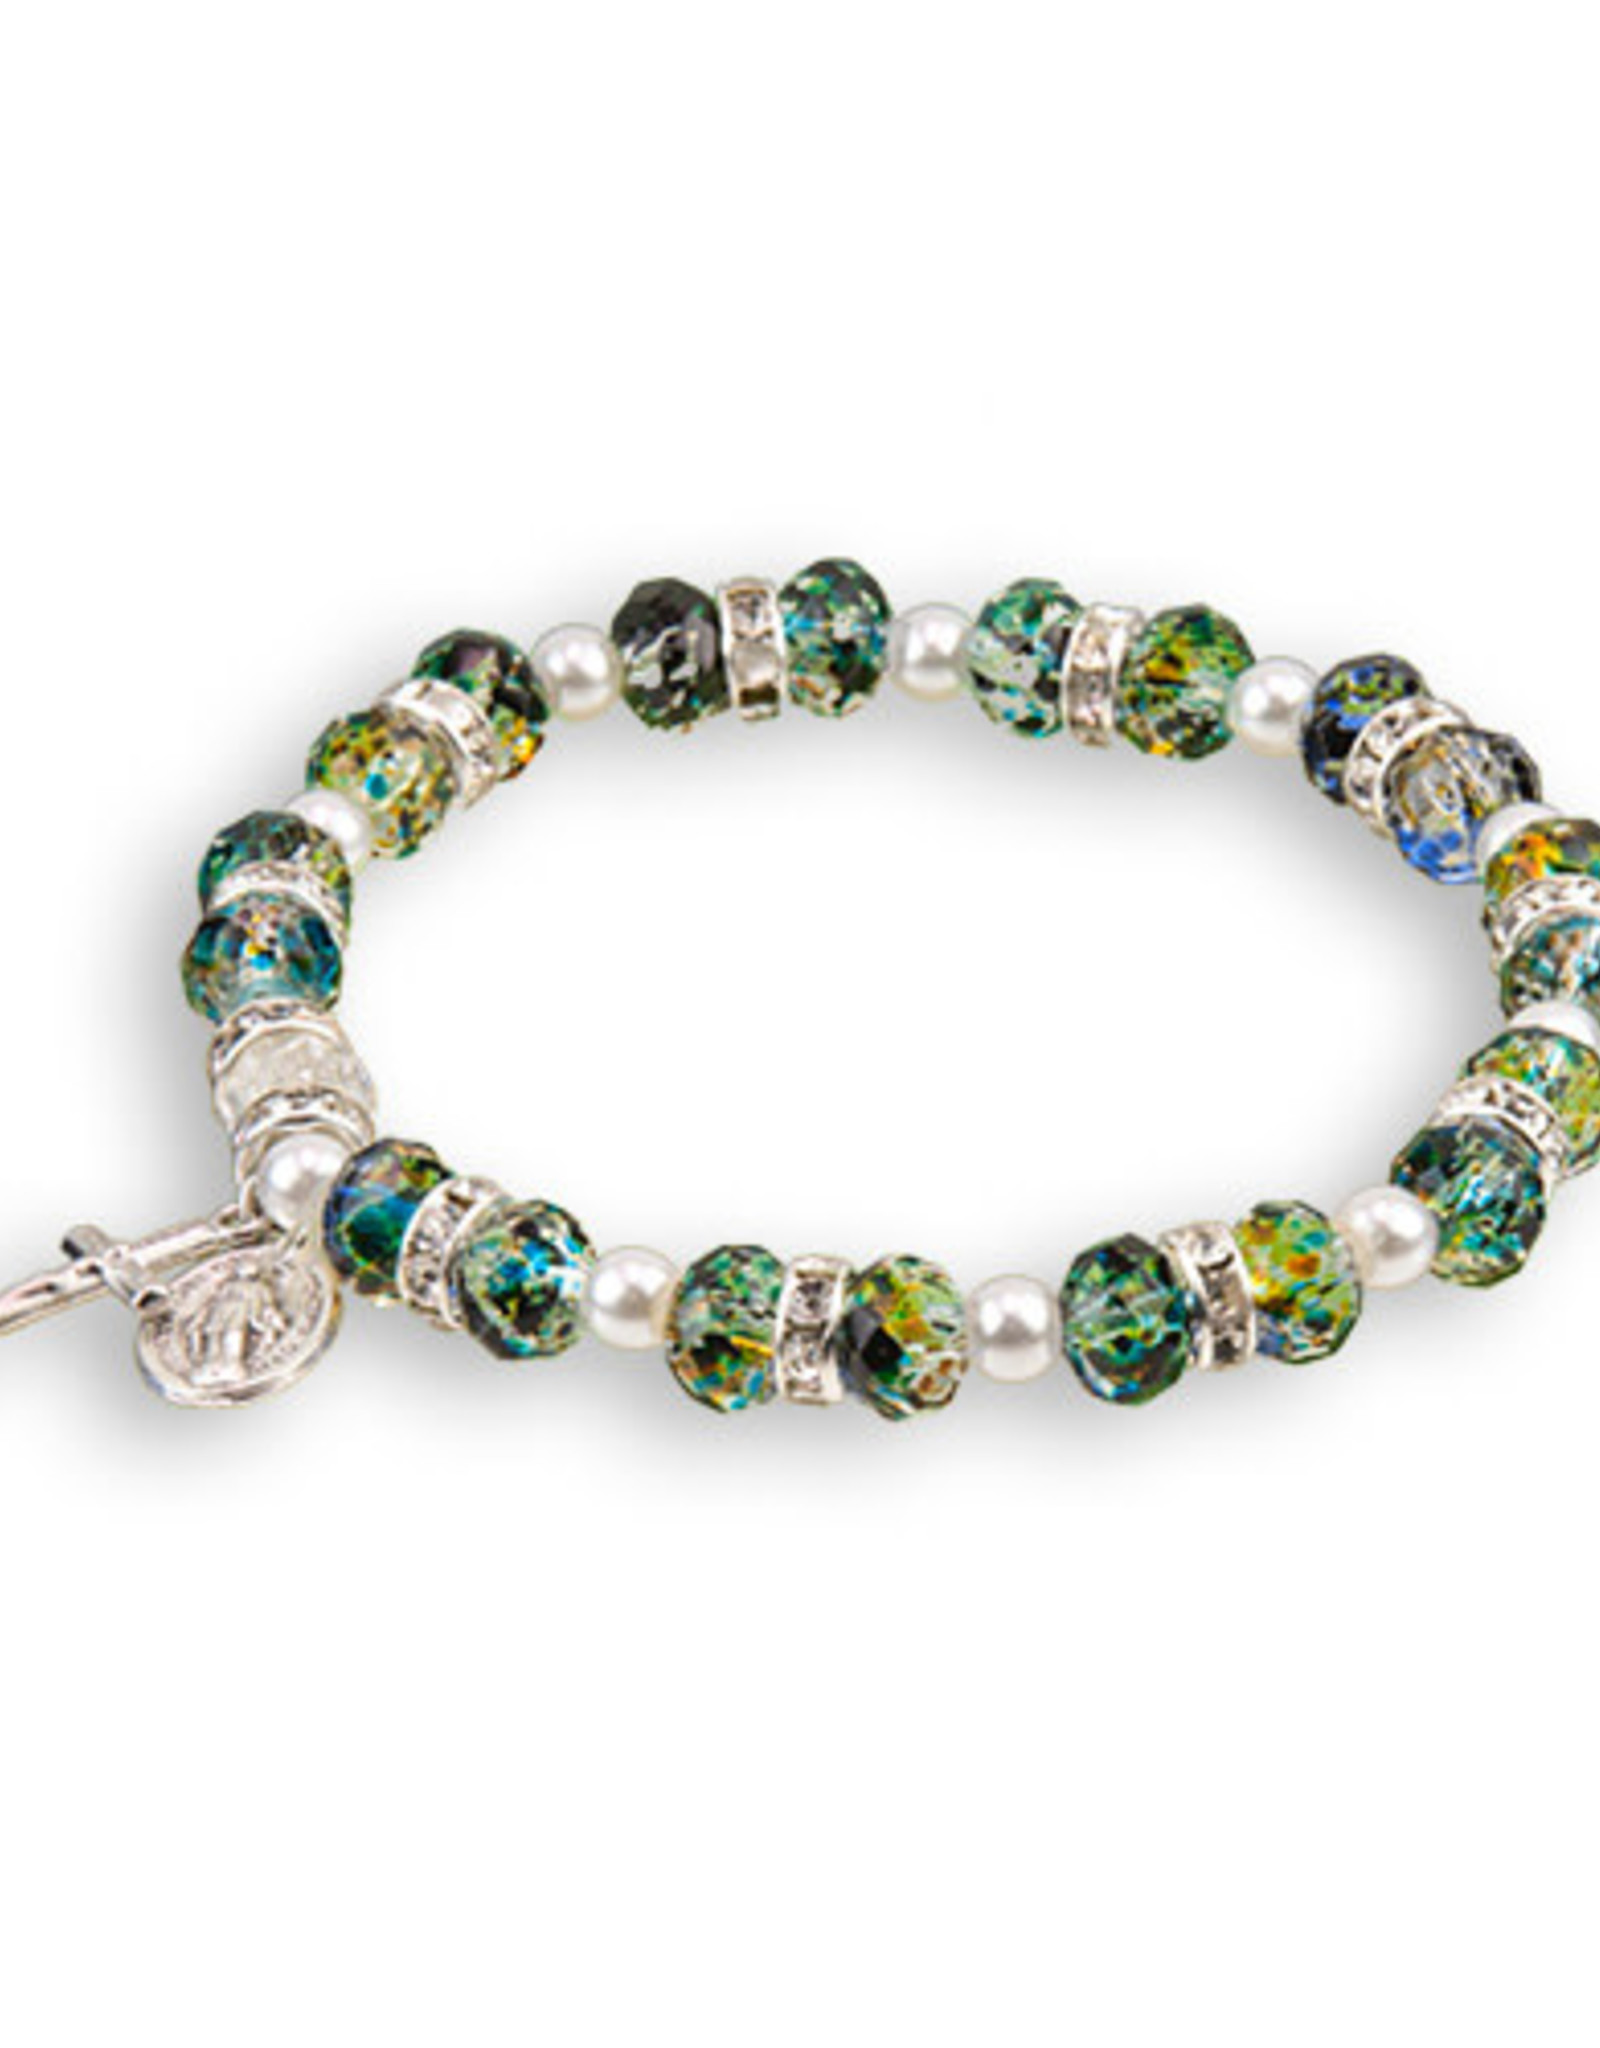 Emerald Tin-Cut Bracelet with Silver Heart Charm